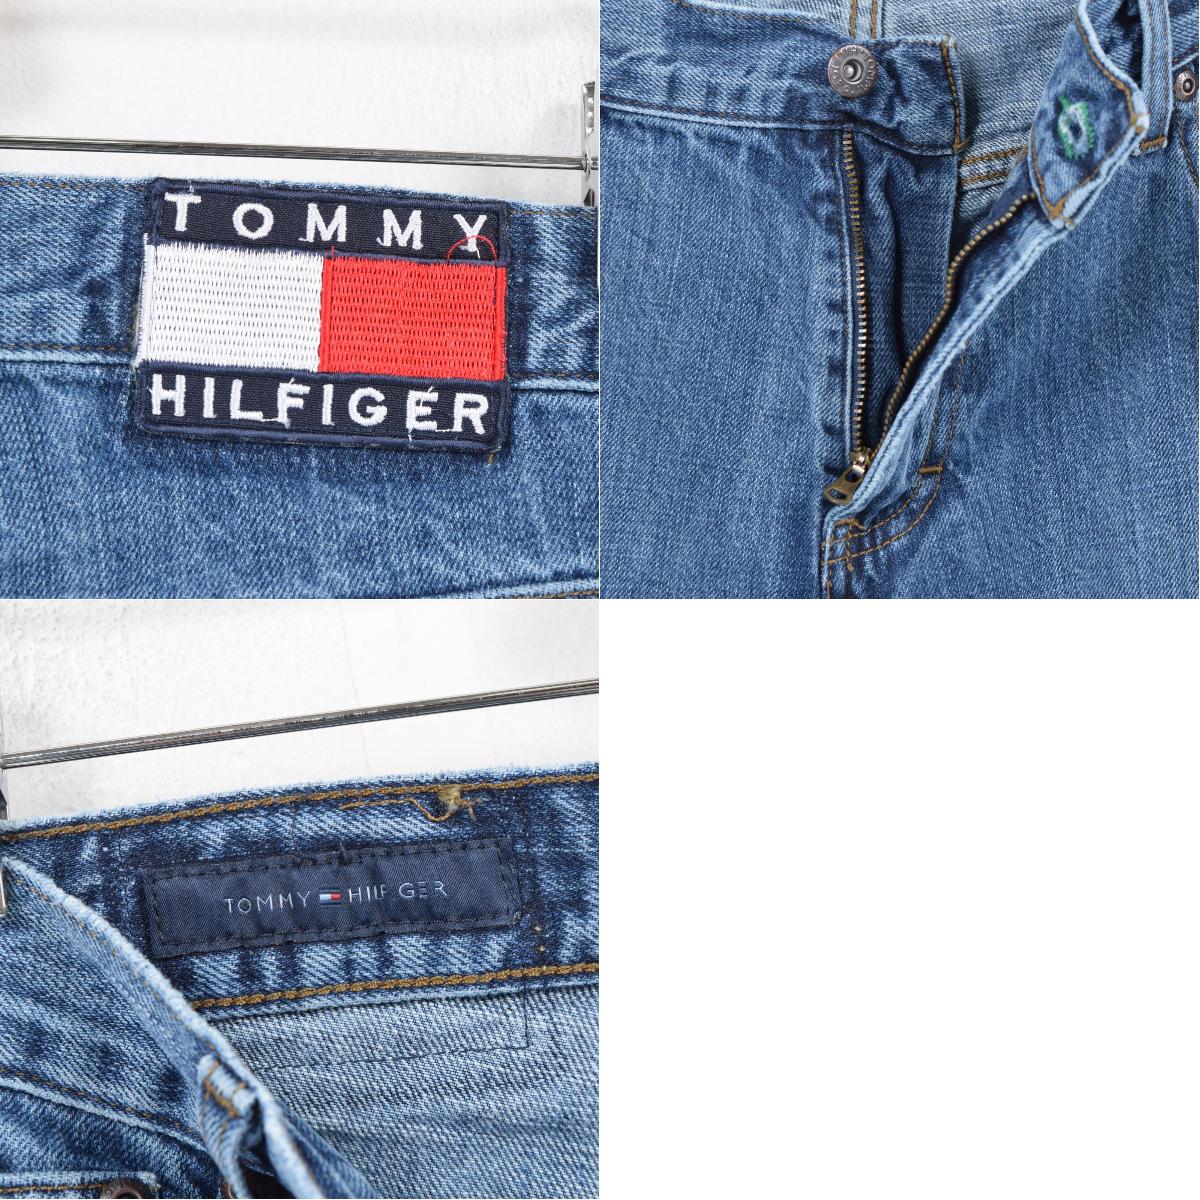 hilfiger freedom jeans